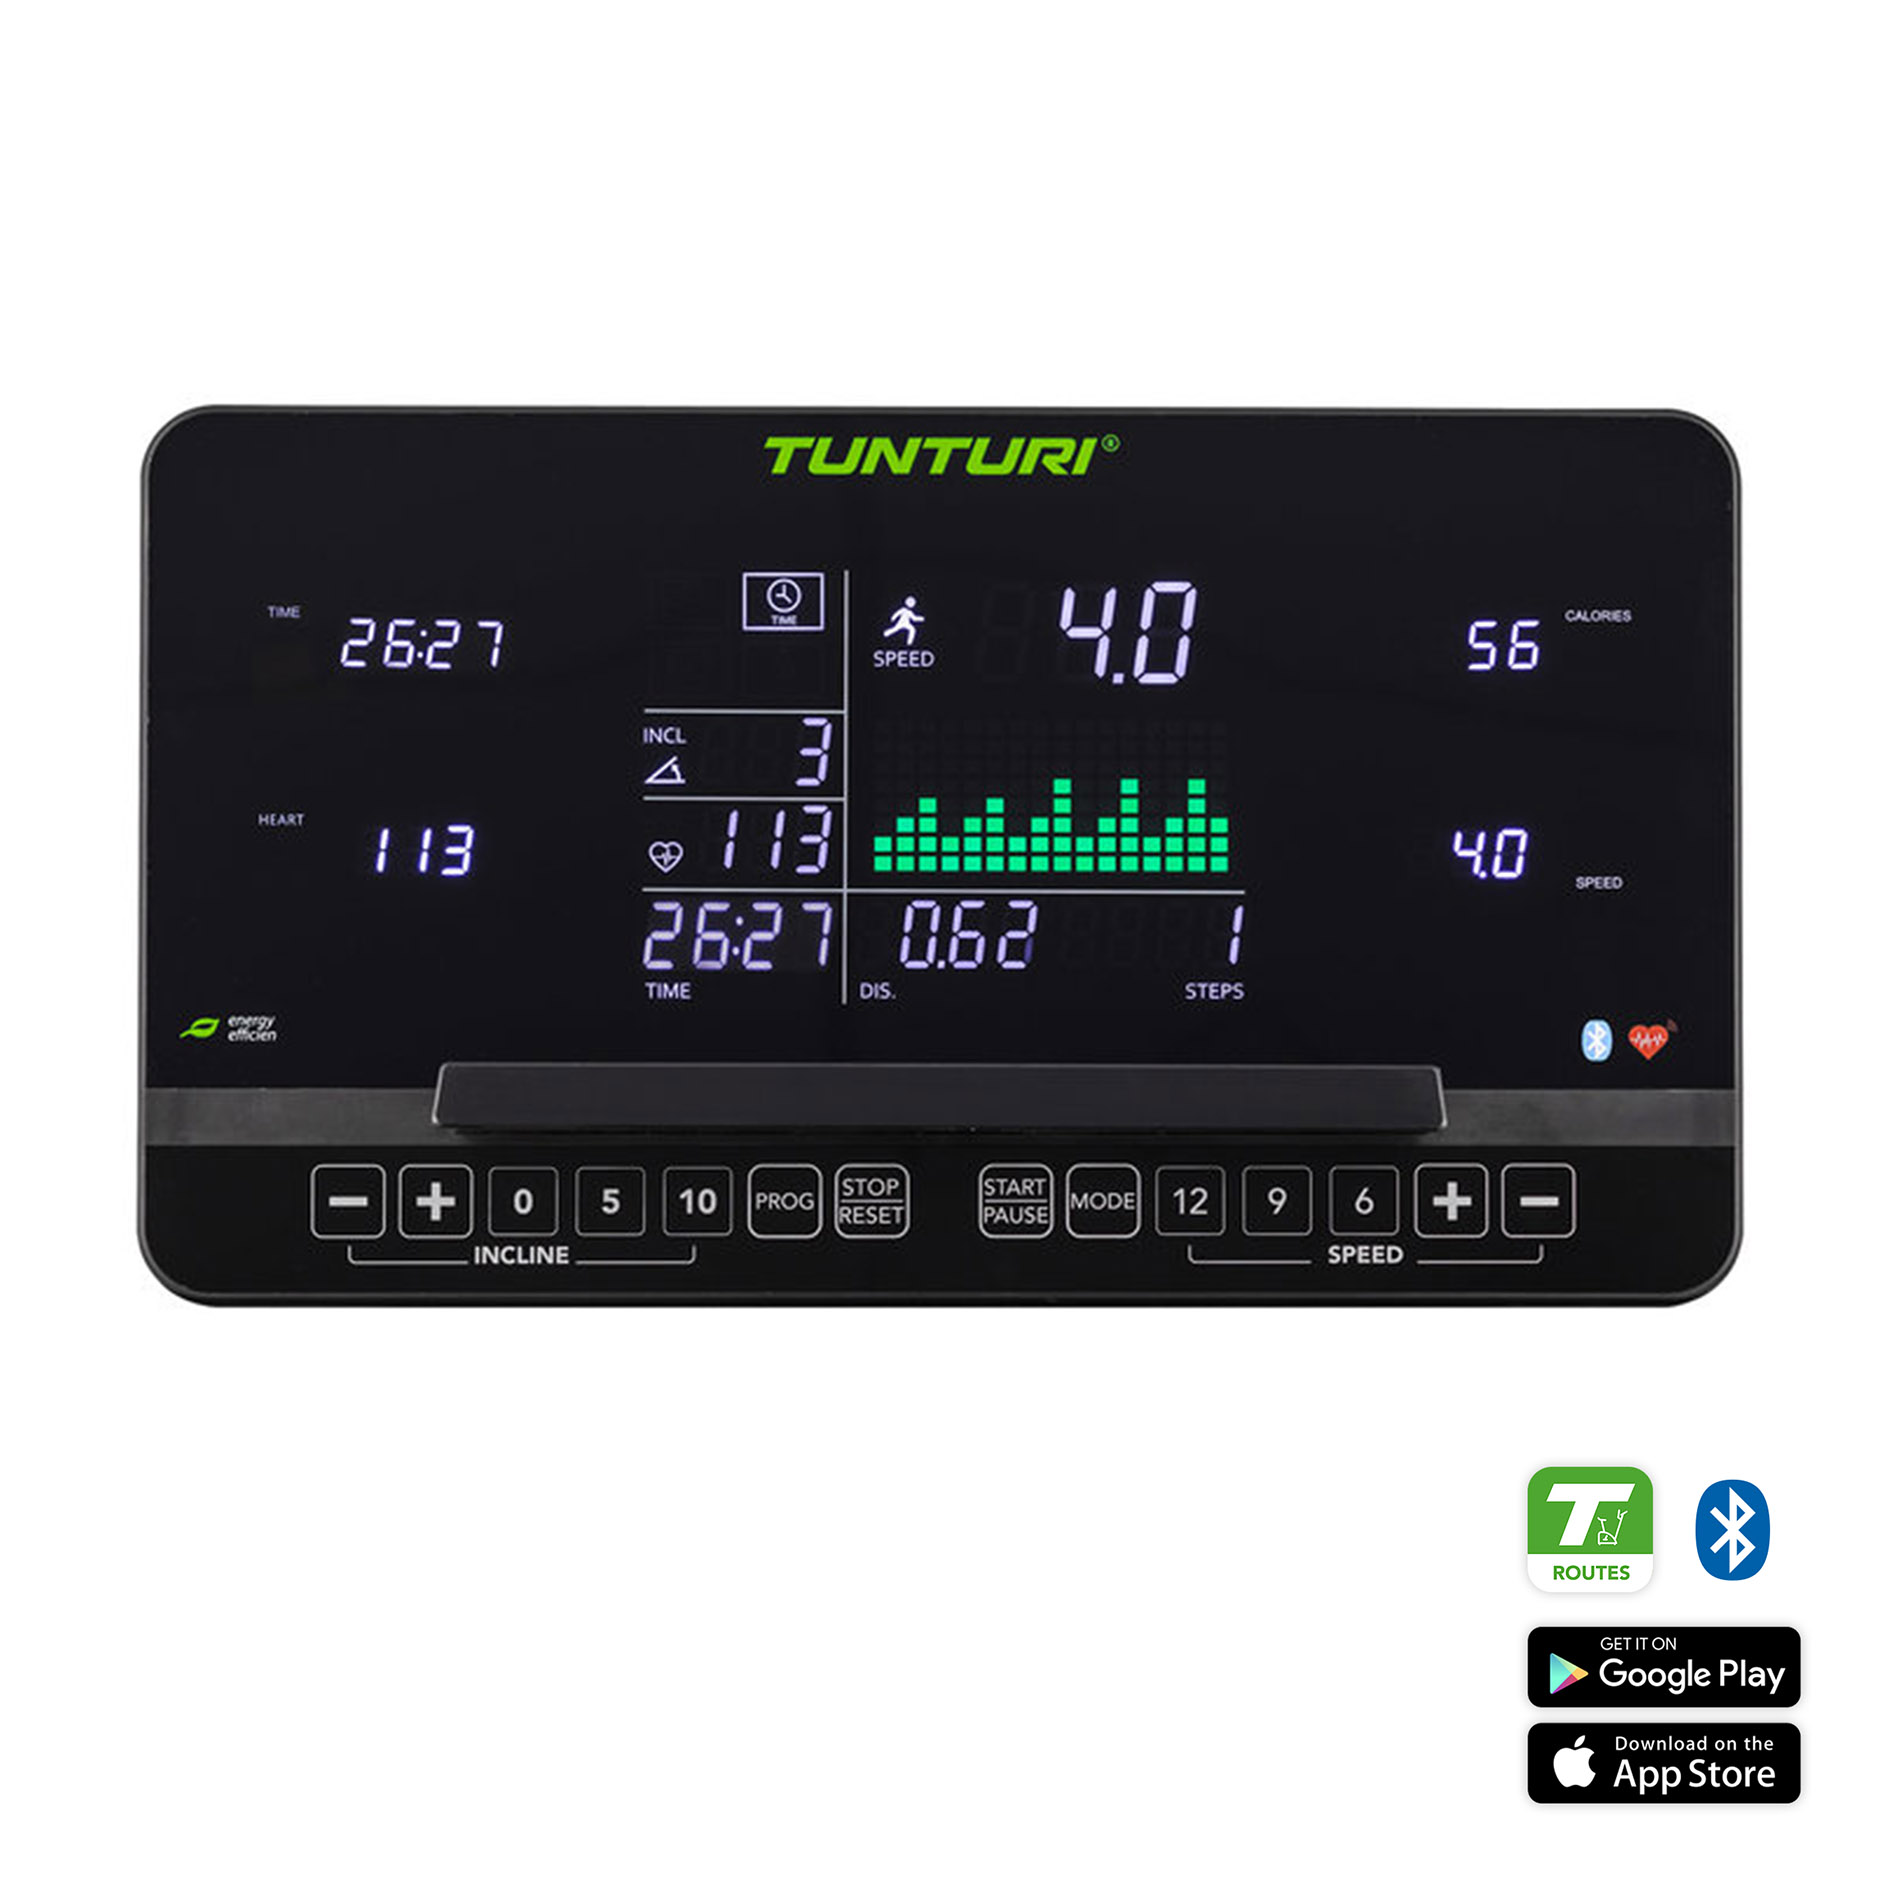 Treadmill Endurance T90